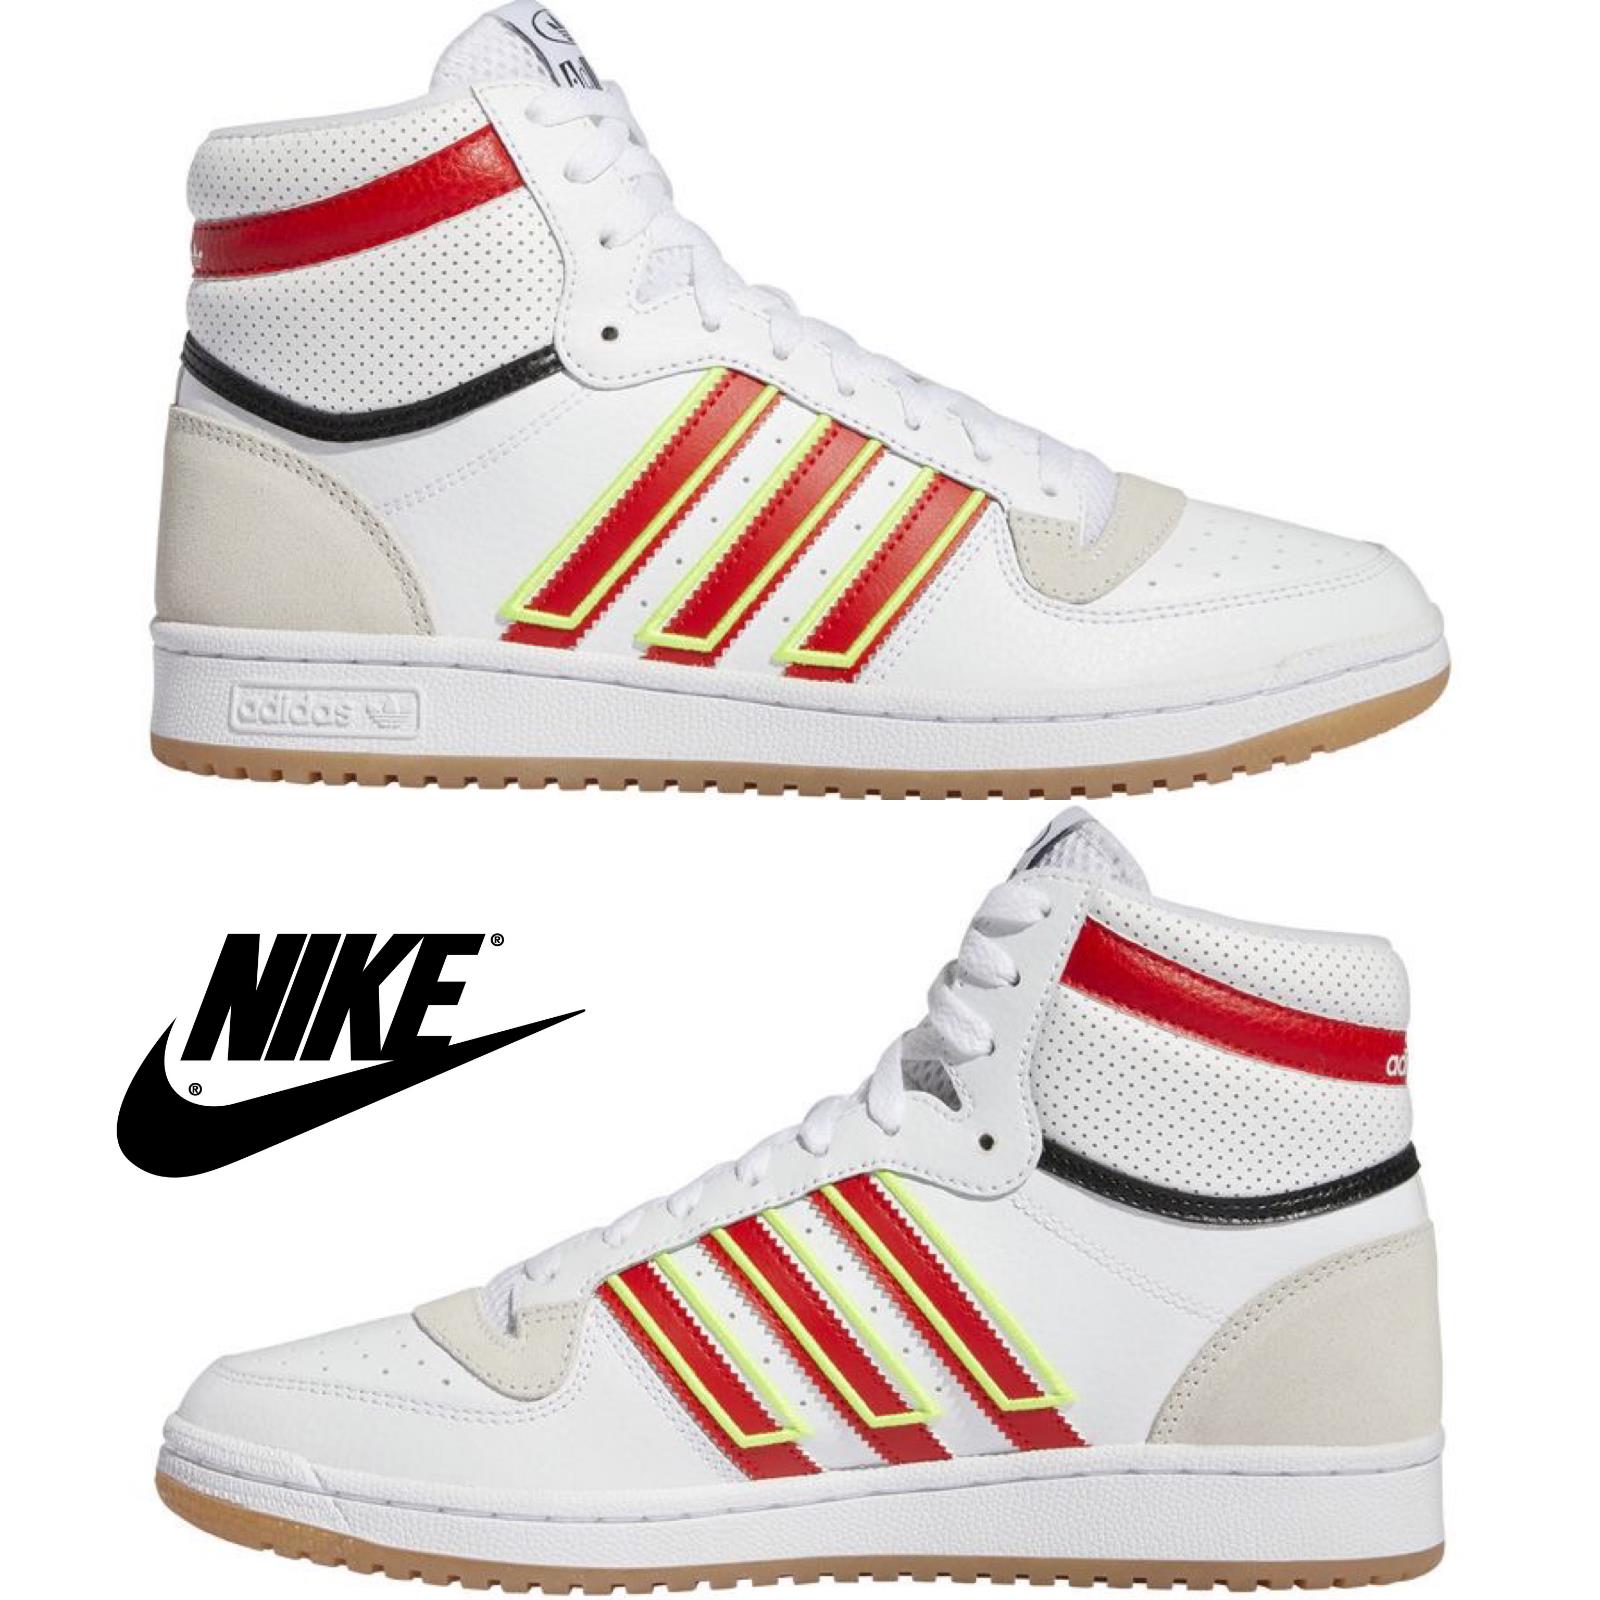 Adidas Originals Top Ten Hi Men`s Sneakers Comfort Casual Shoes White Red